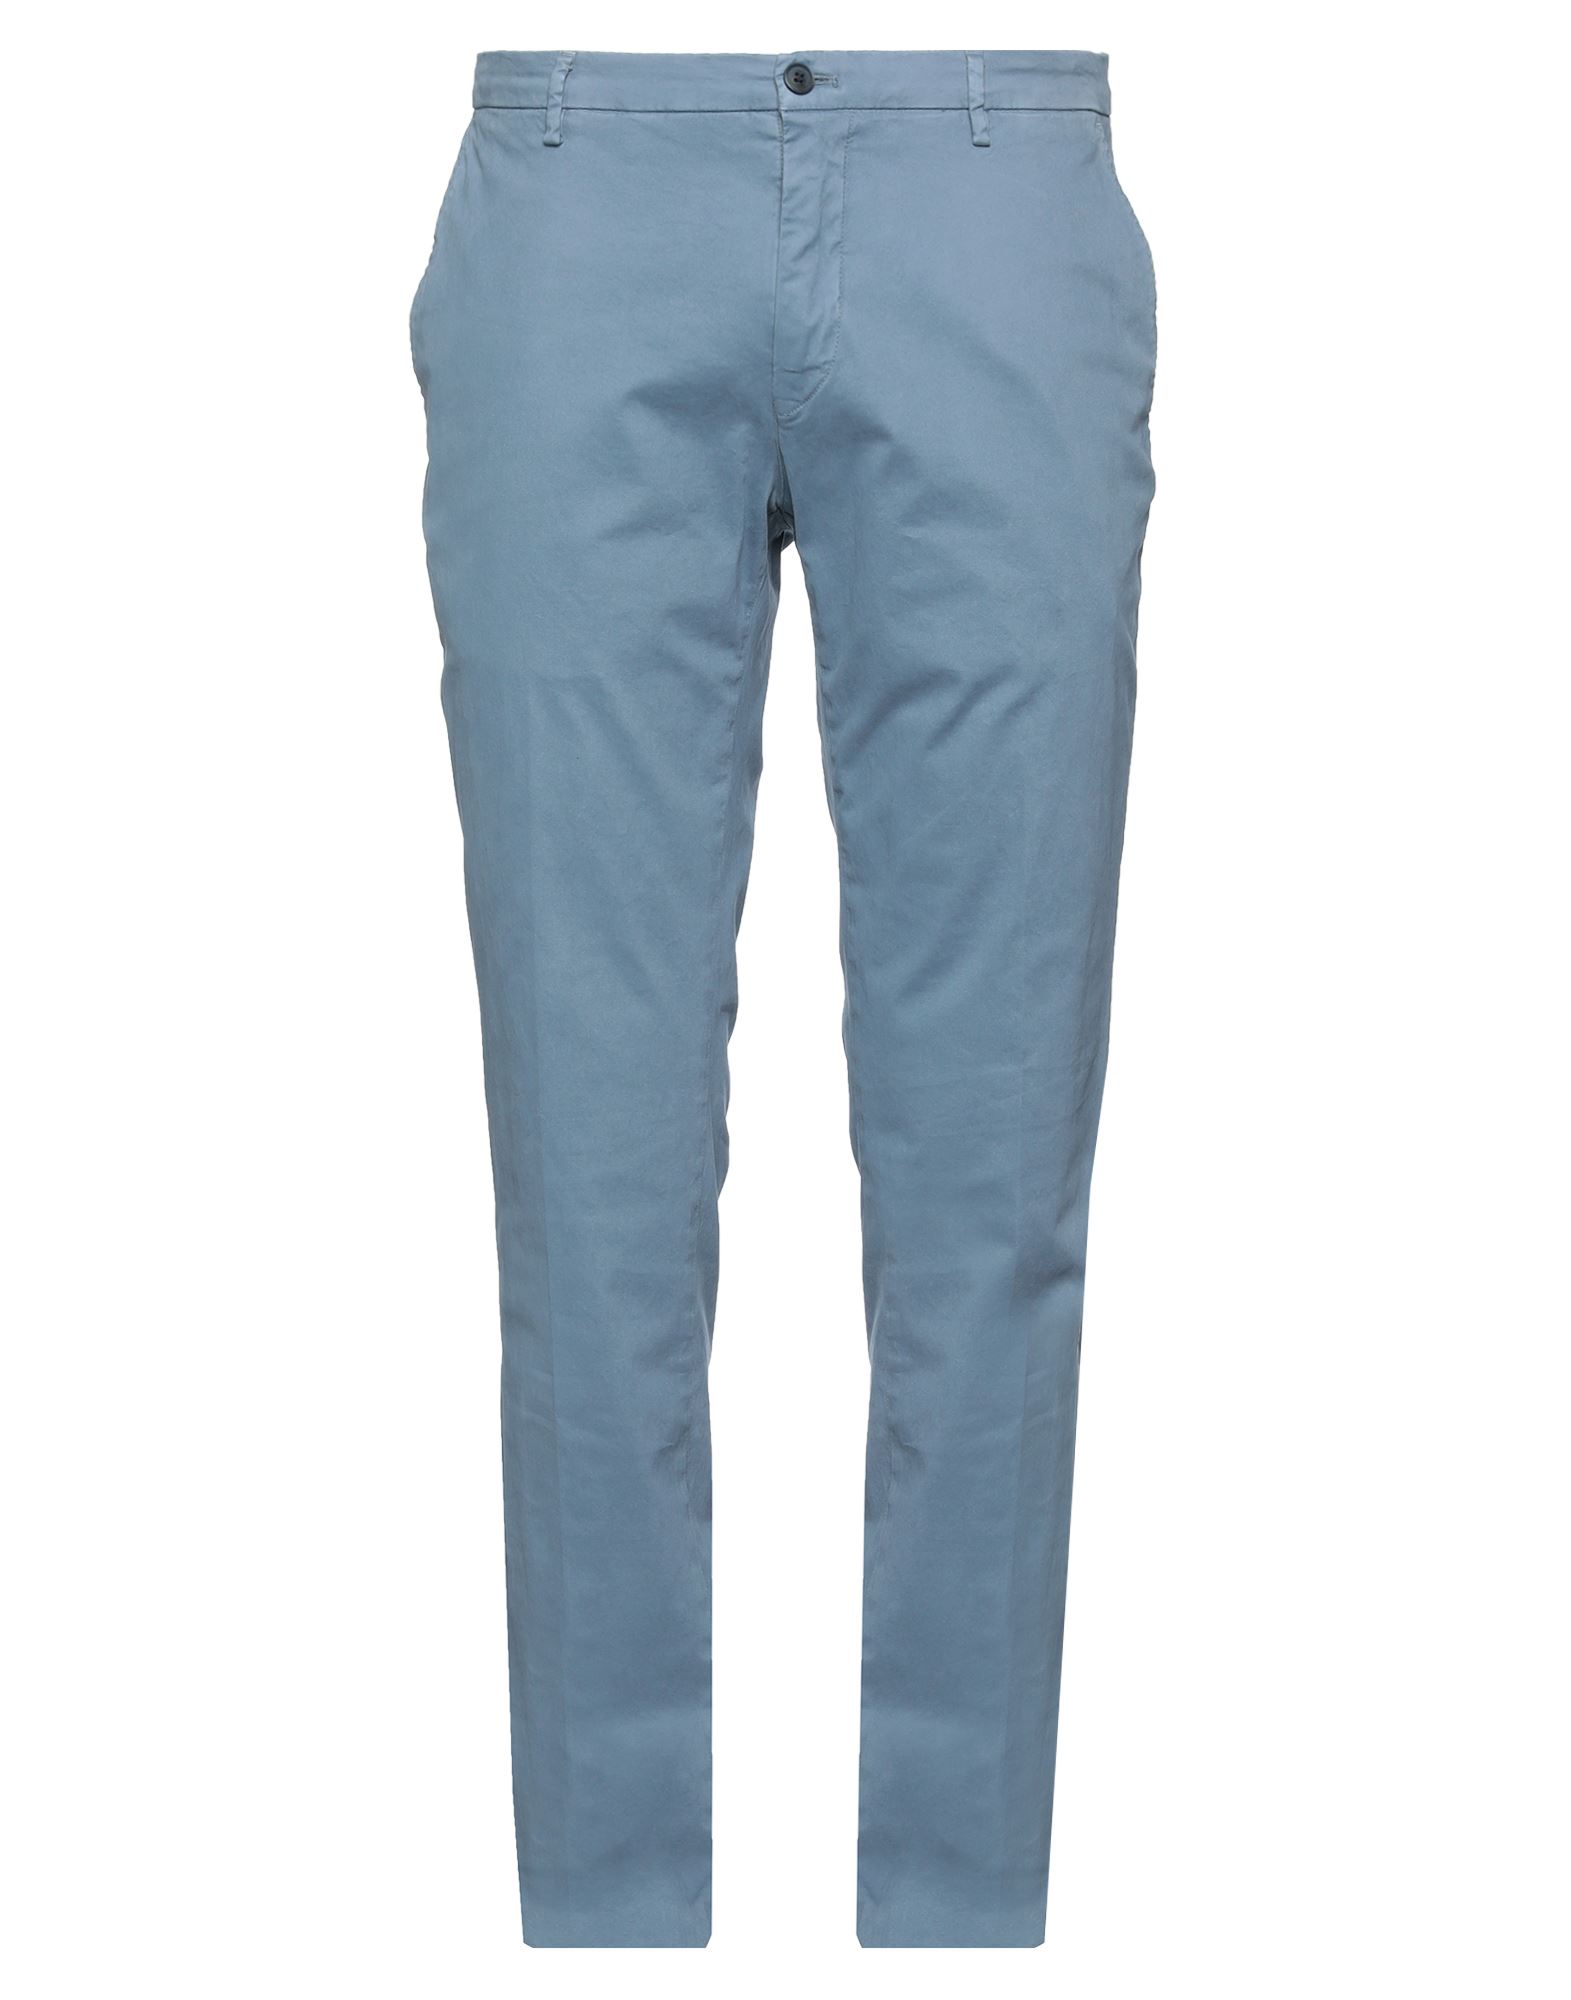 Mason's Pants In Pastel Blue